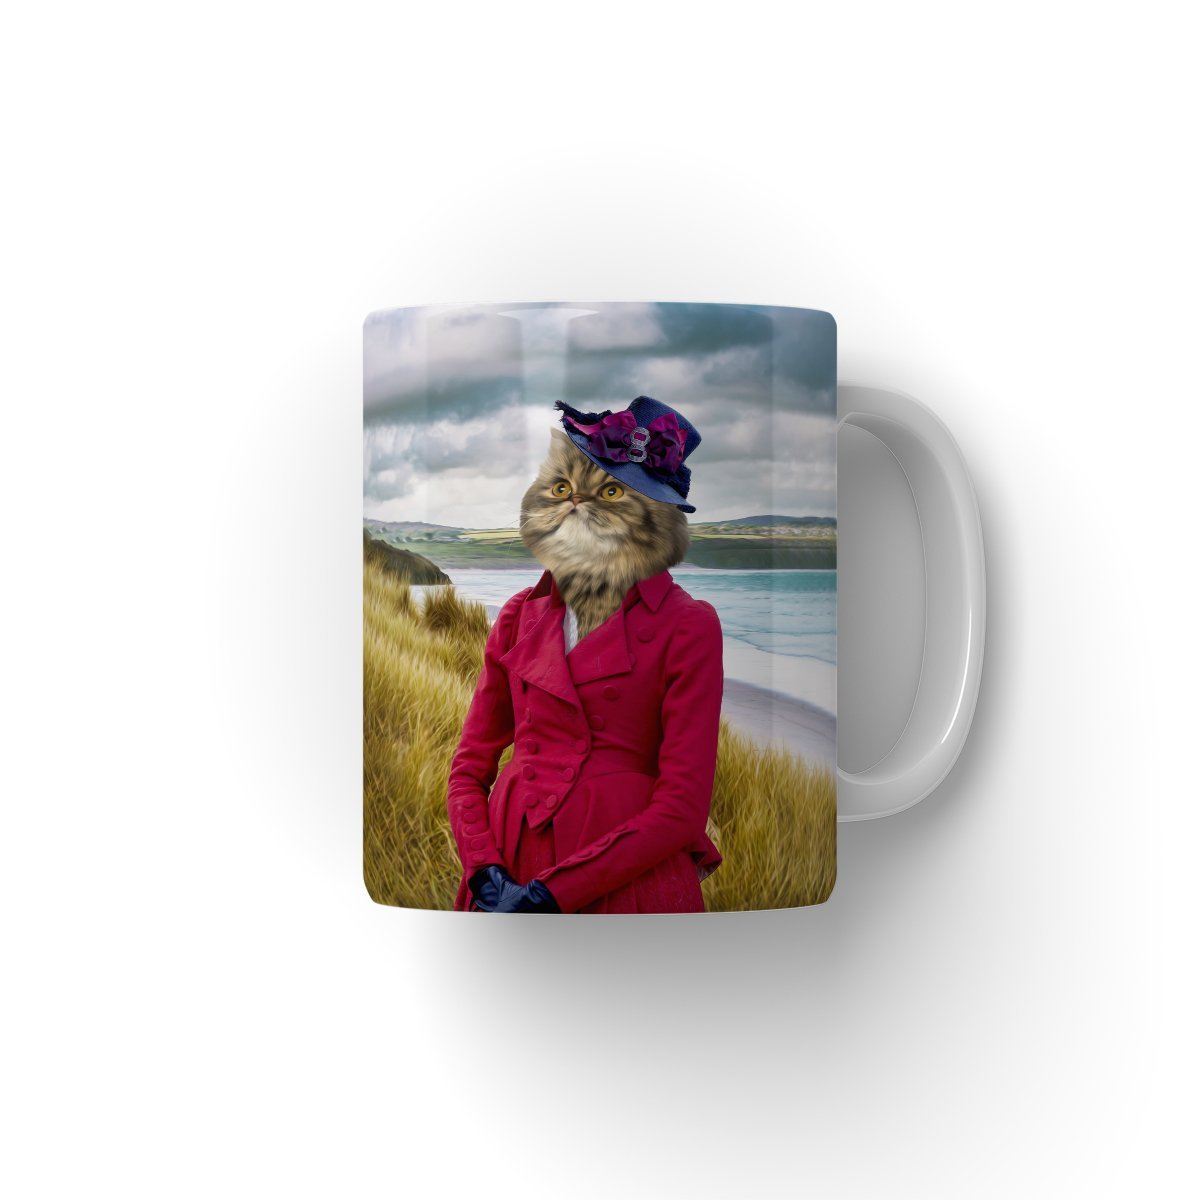 Lady Caroline (Poldark Inspired): Custom Pet Mug - Paw & Glory - #pet portraits# - #dog portraits# - #pet portraits uk#paw and glory, pet portraits Mug,dog travel mug, coffee mugs gift, custom designed mugs, picture of mugs, pet mug